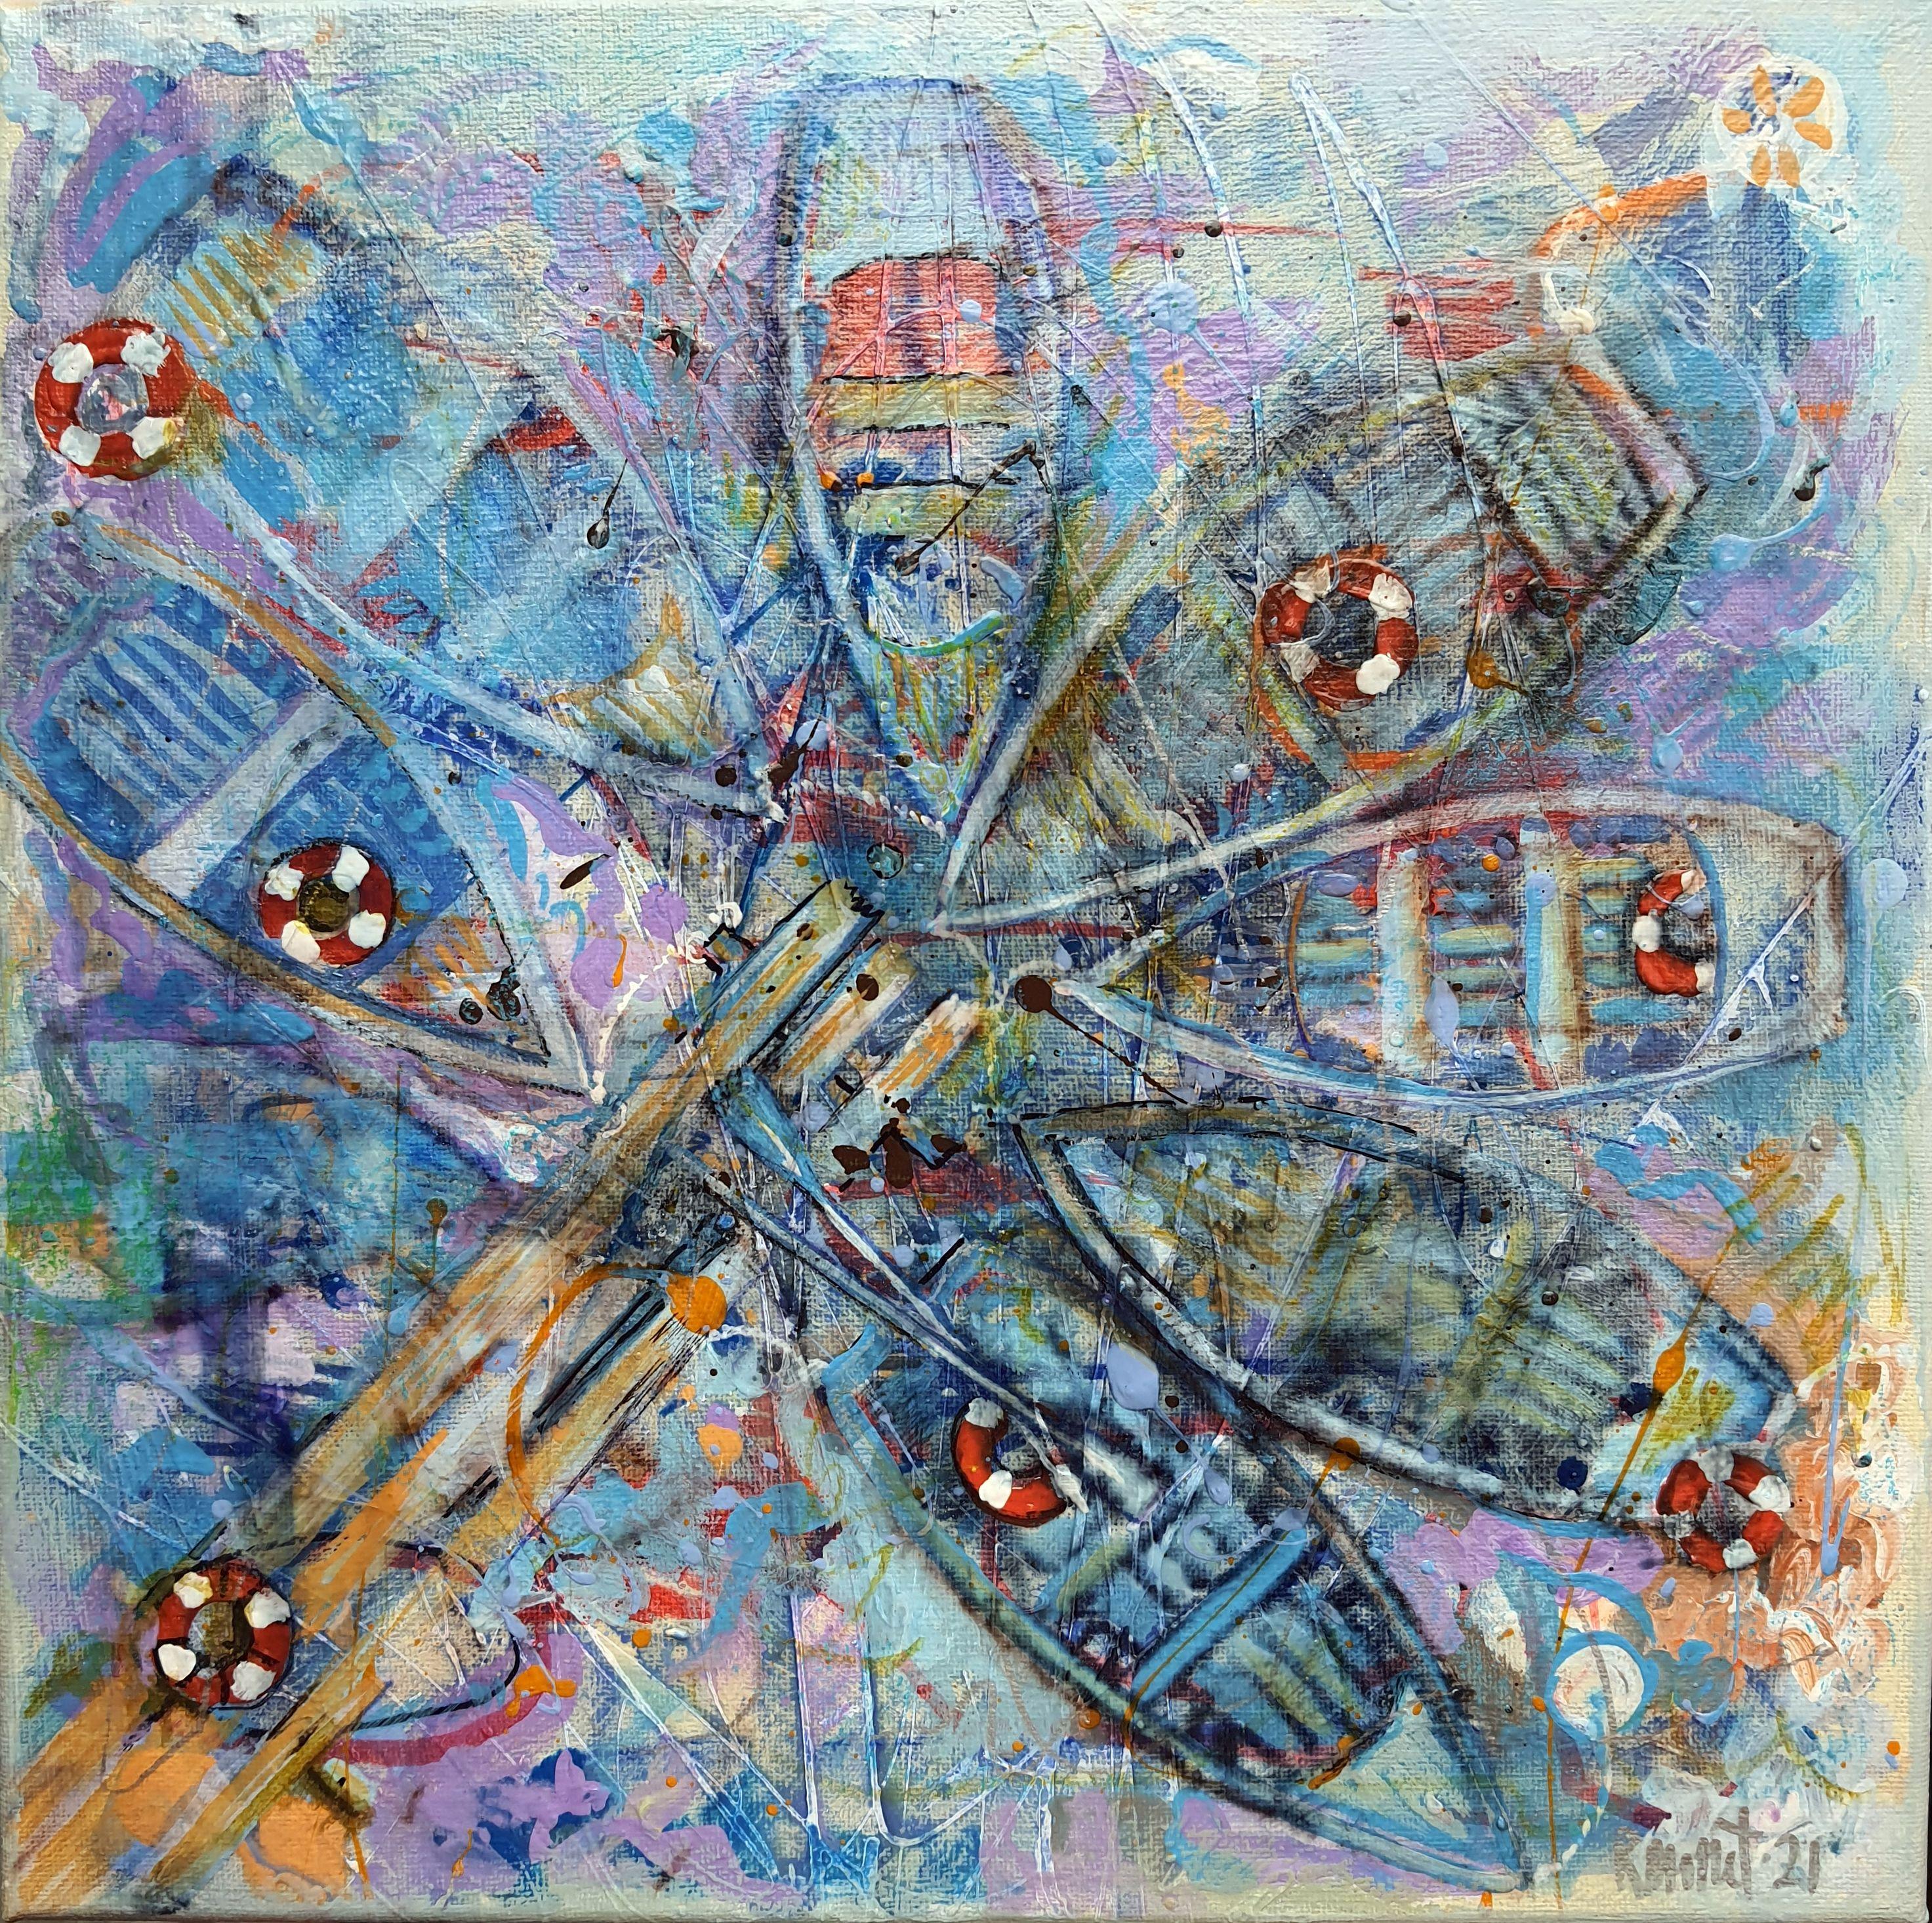 RAKHMET REDZHEPOV (RAMZI) Landscape Painting - Blue Boats